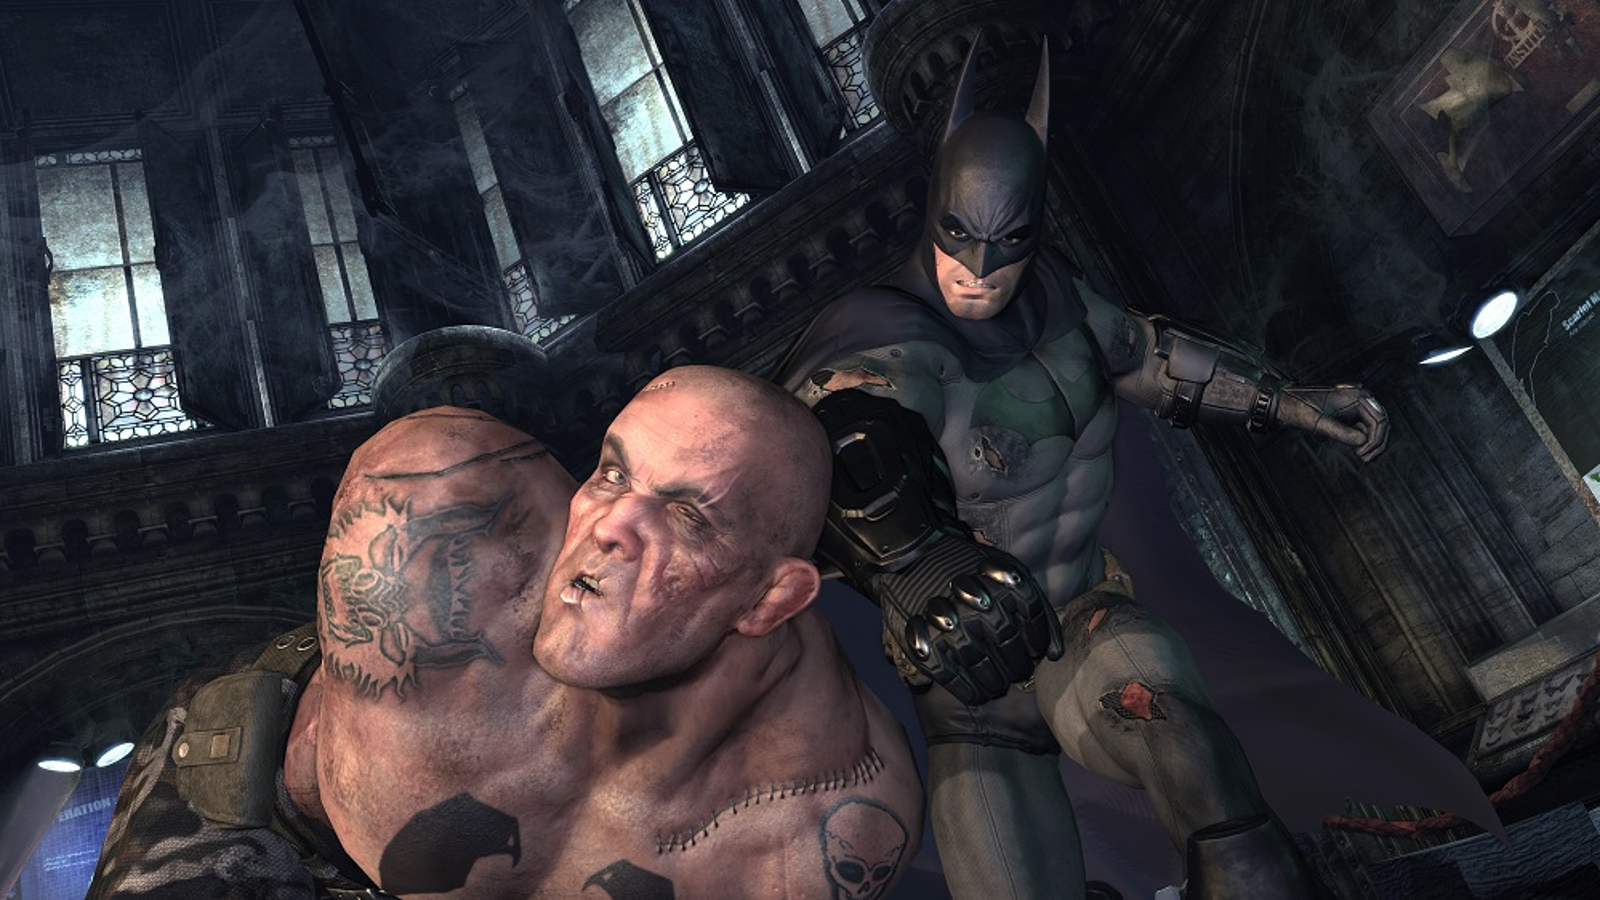 batman arkham city goty save file editor